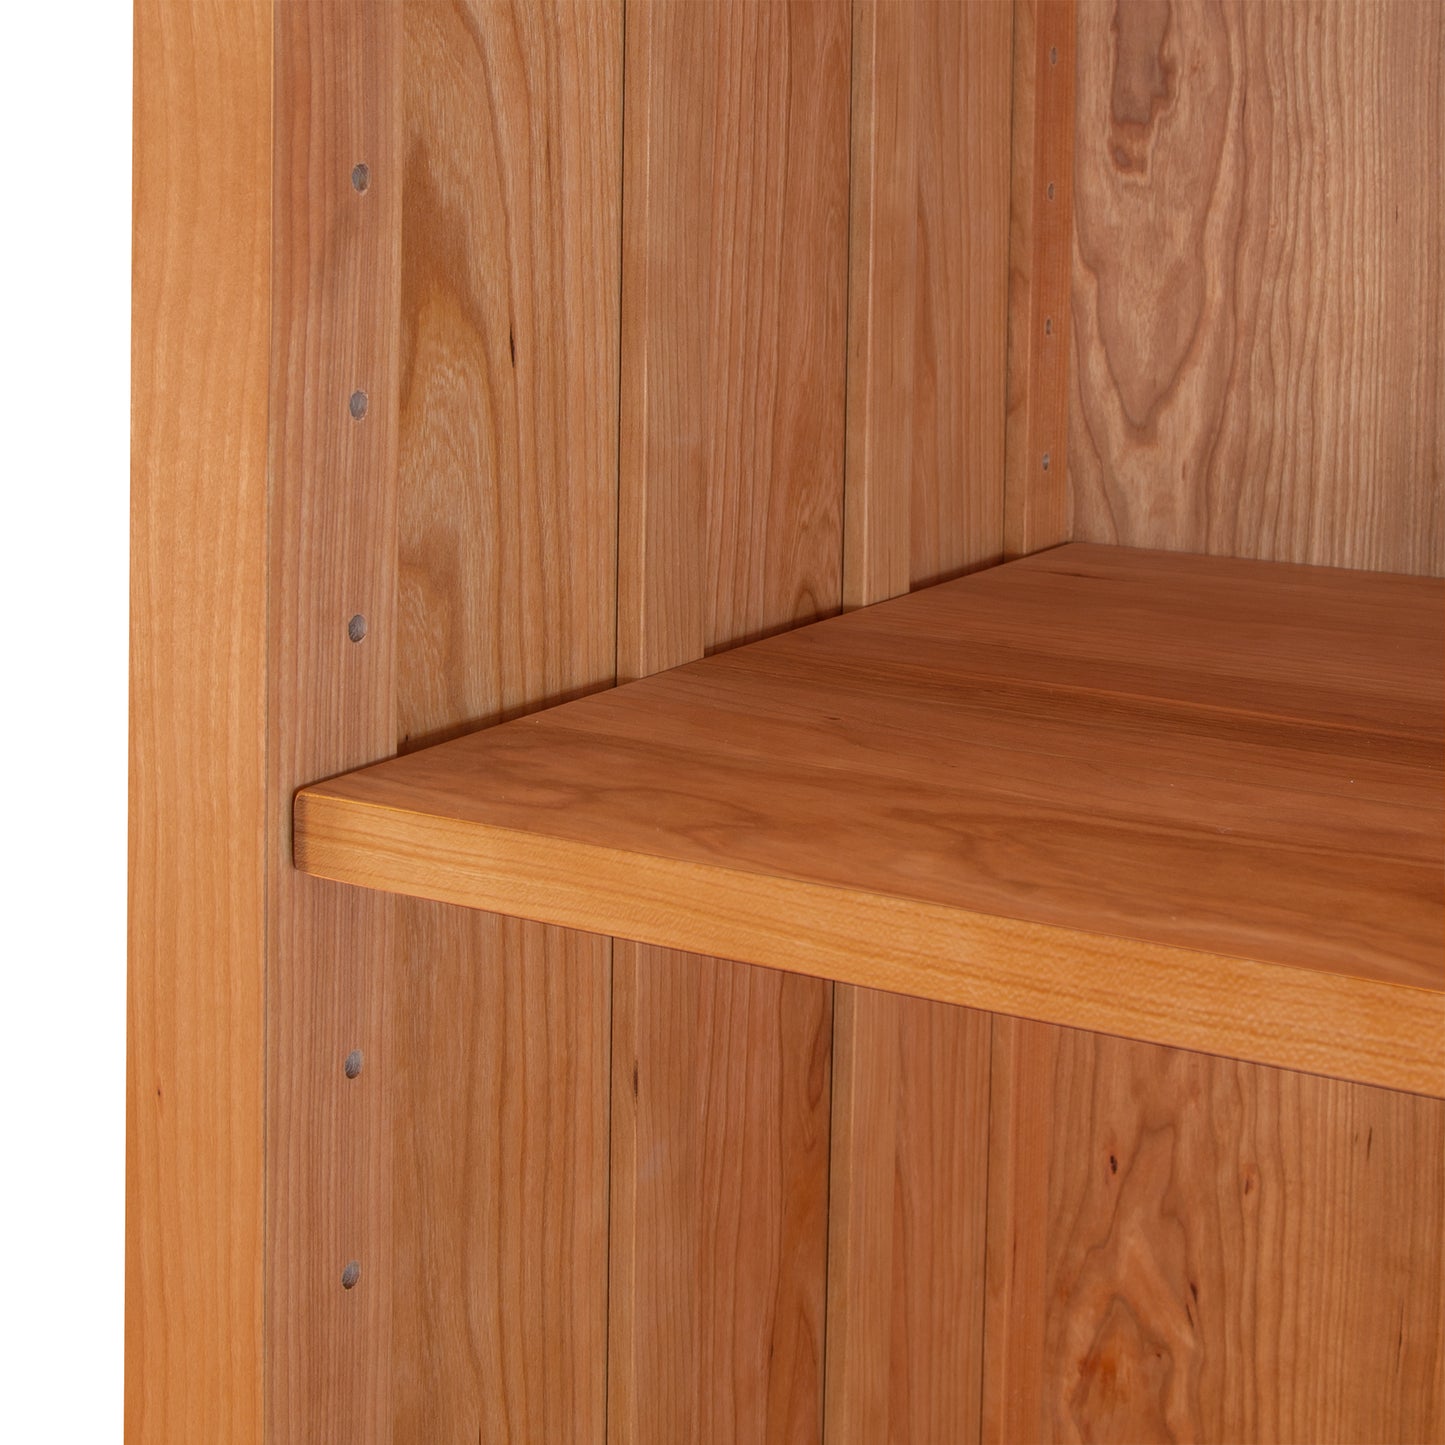 A Vermont Furniture Designs Contemporary Craftsman Custom Bookcase.